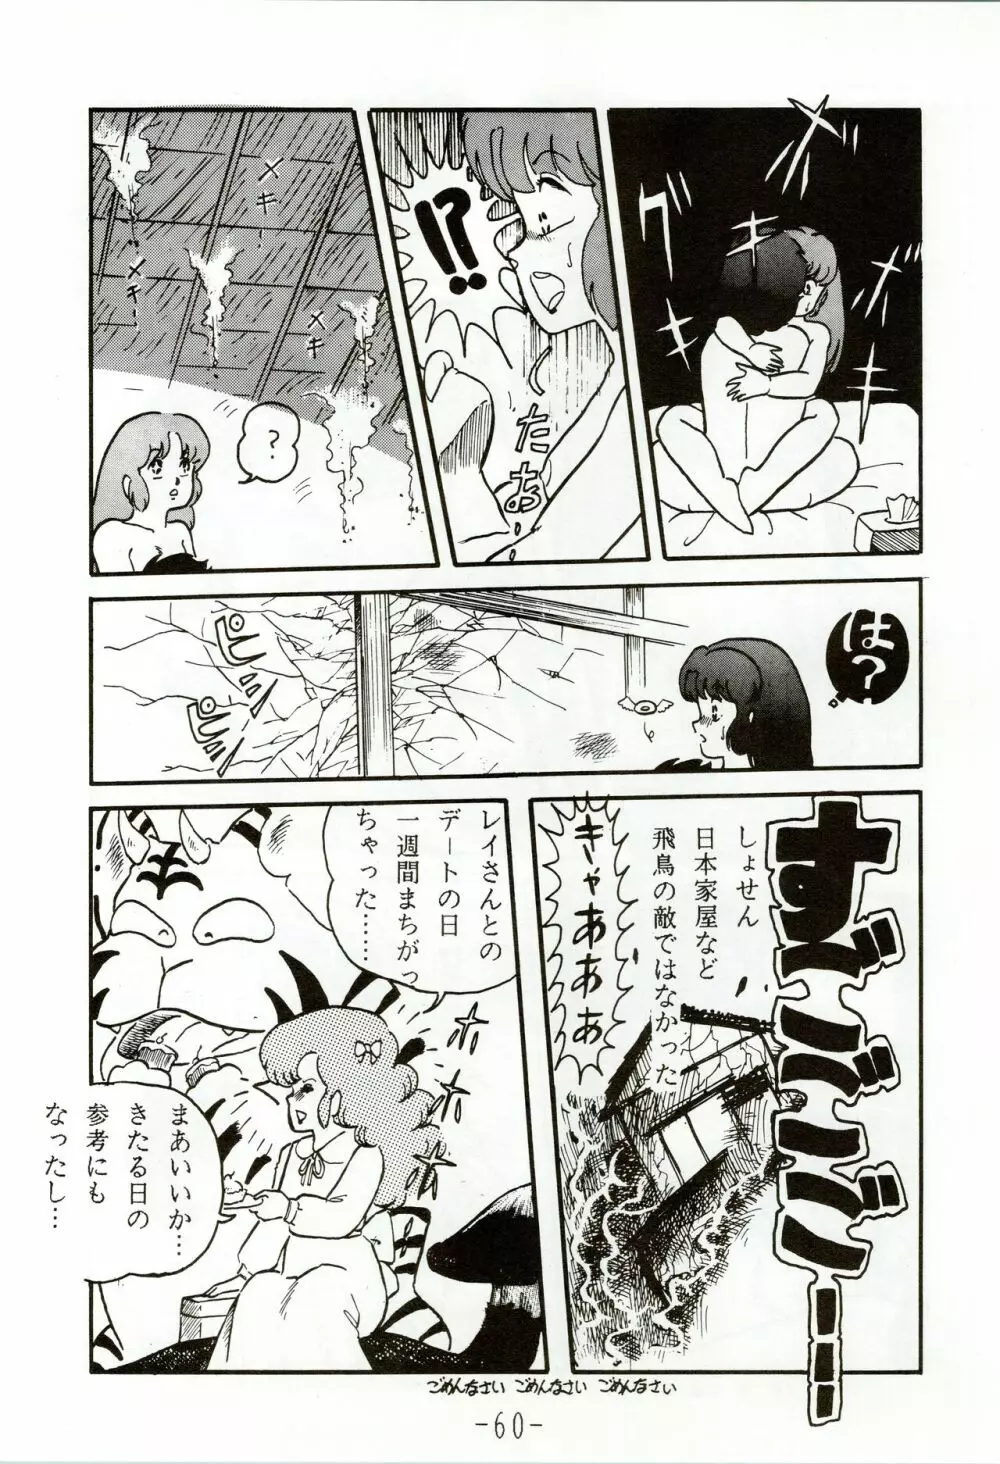 甲冑伝説 - page60